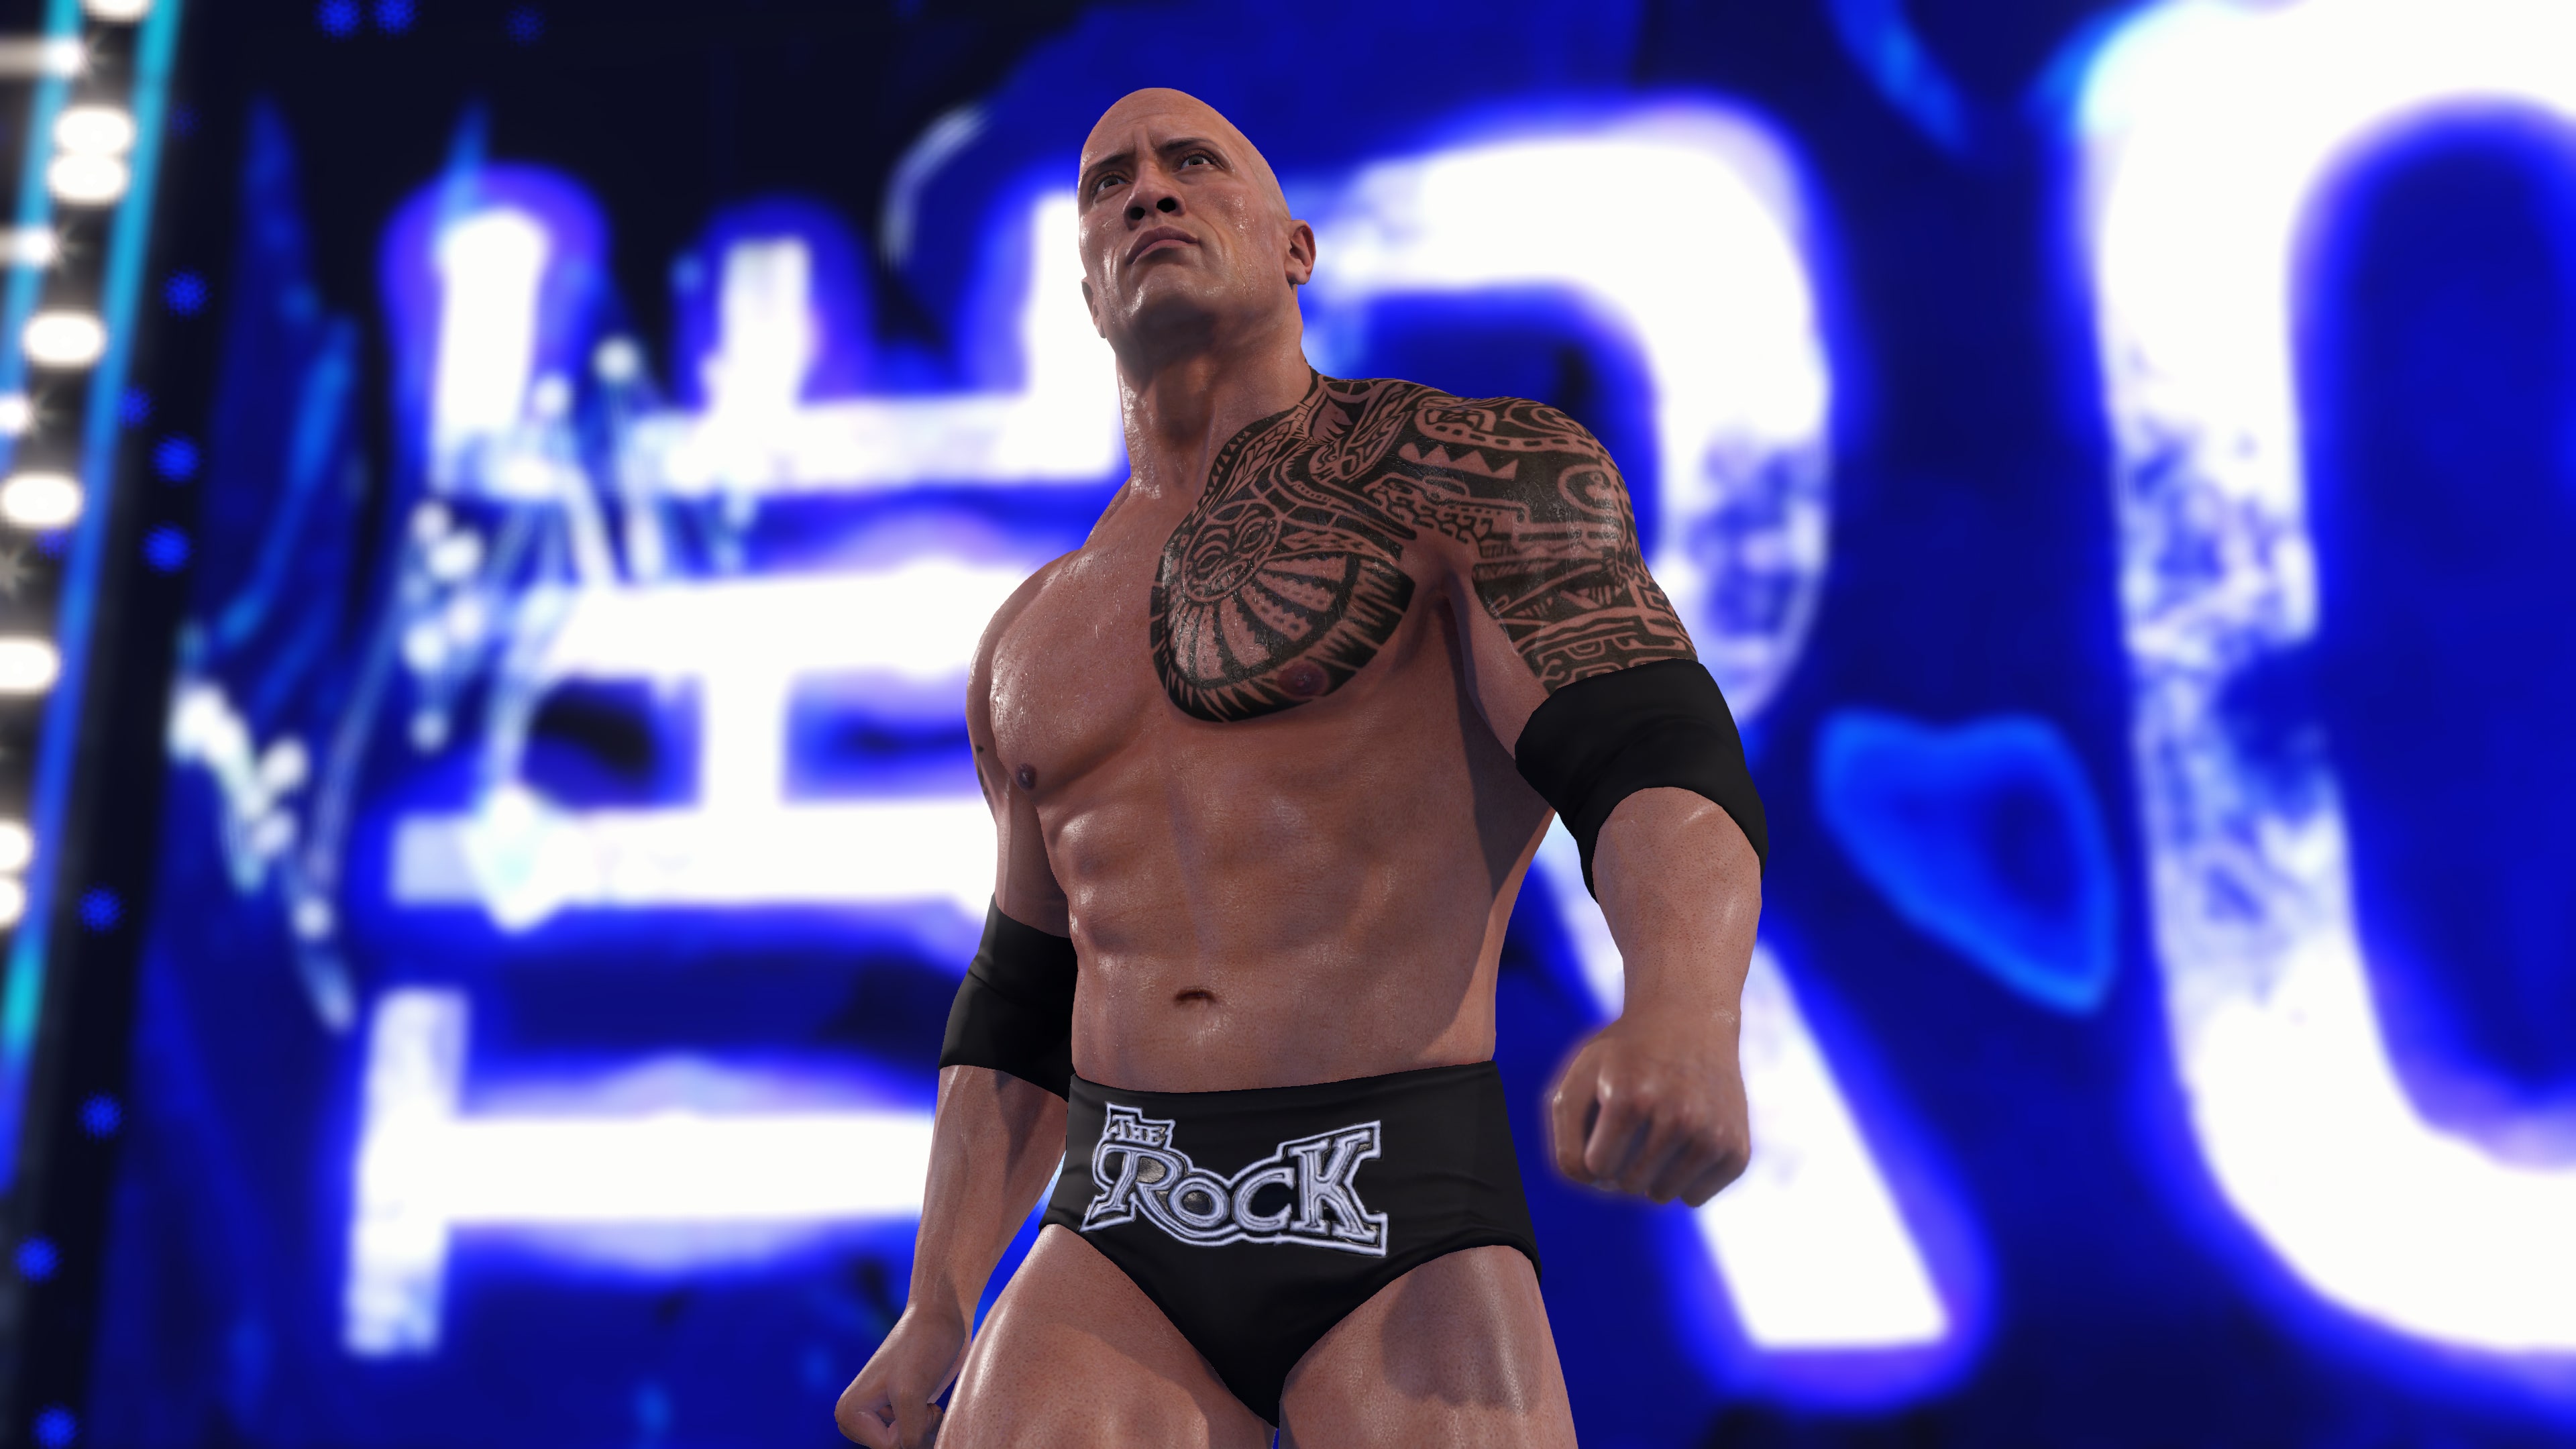 Gioco per PS4 WWE 2K22 - PlayStation 4